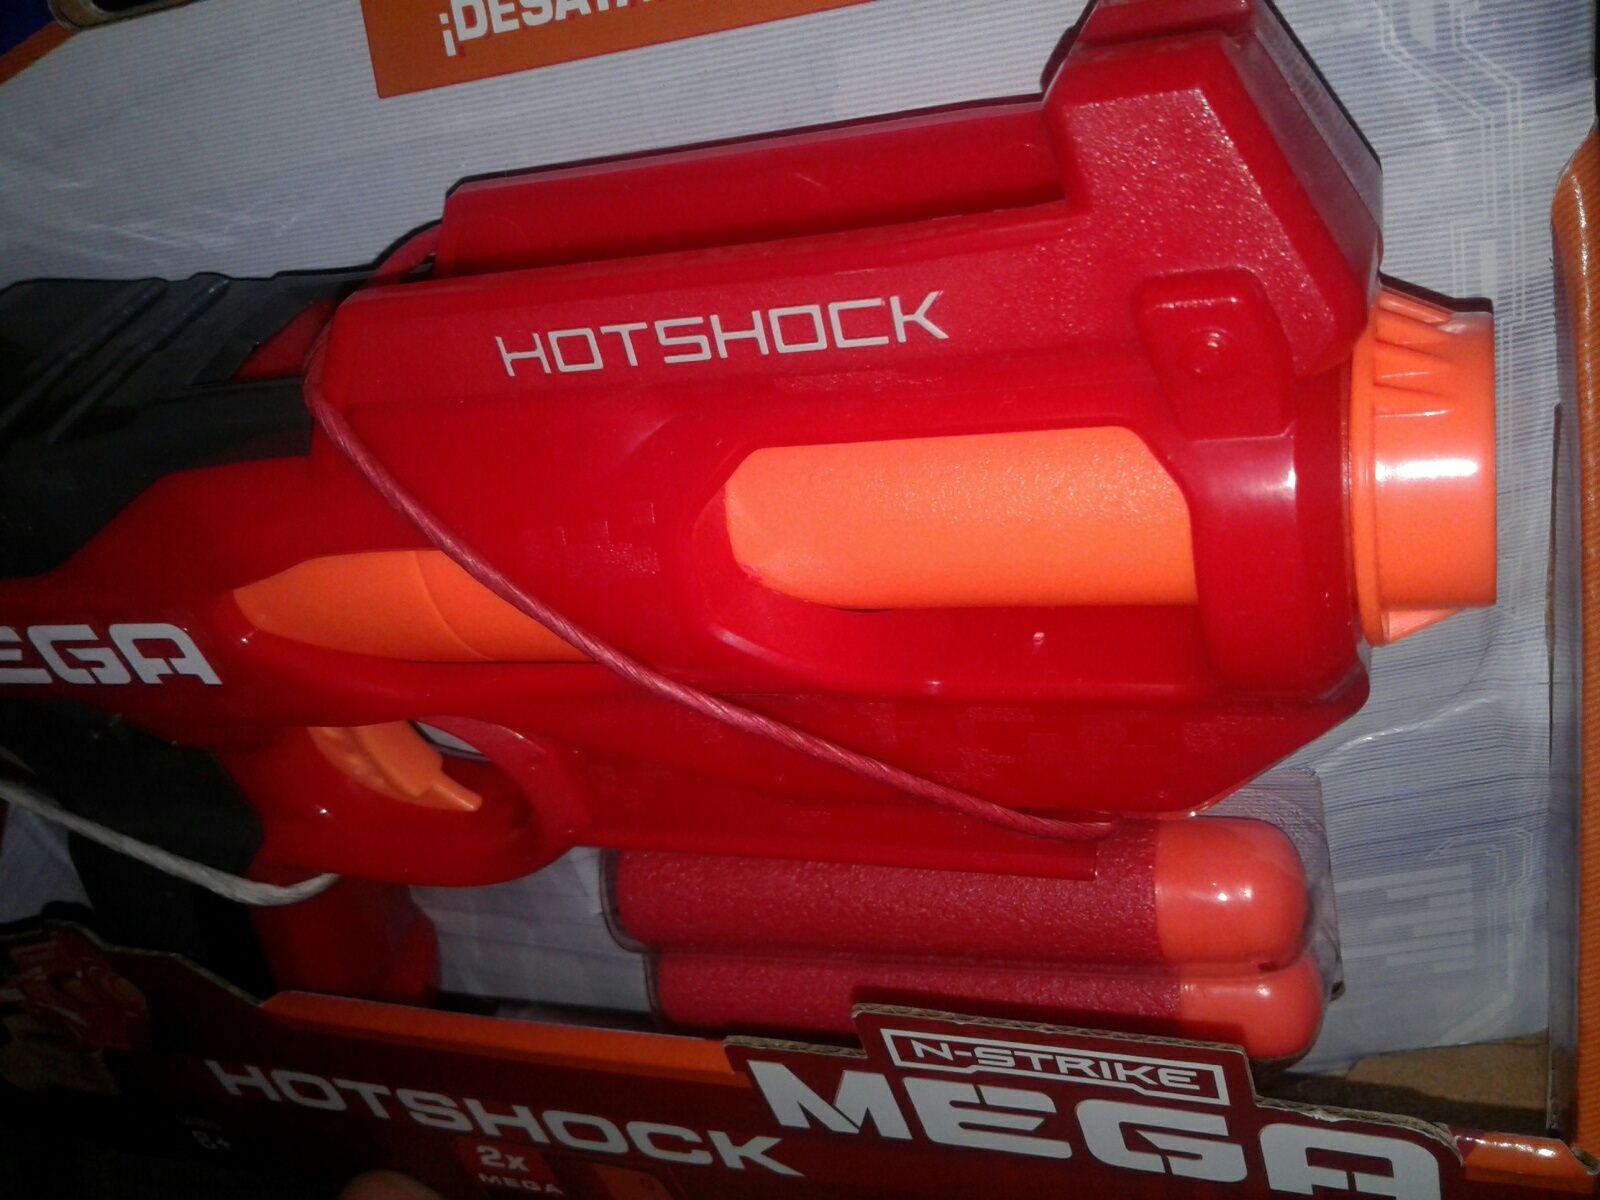 Pistol jucarie Nerf Mega Hotshock, 2 gloante MEGA, moi, nou, sigilat